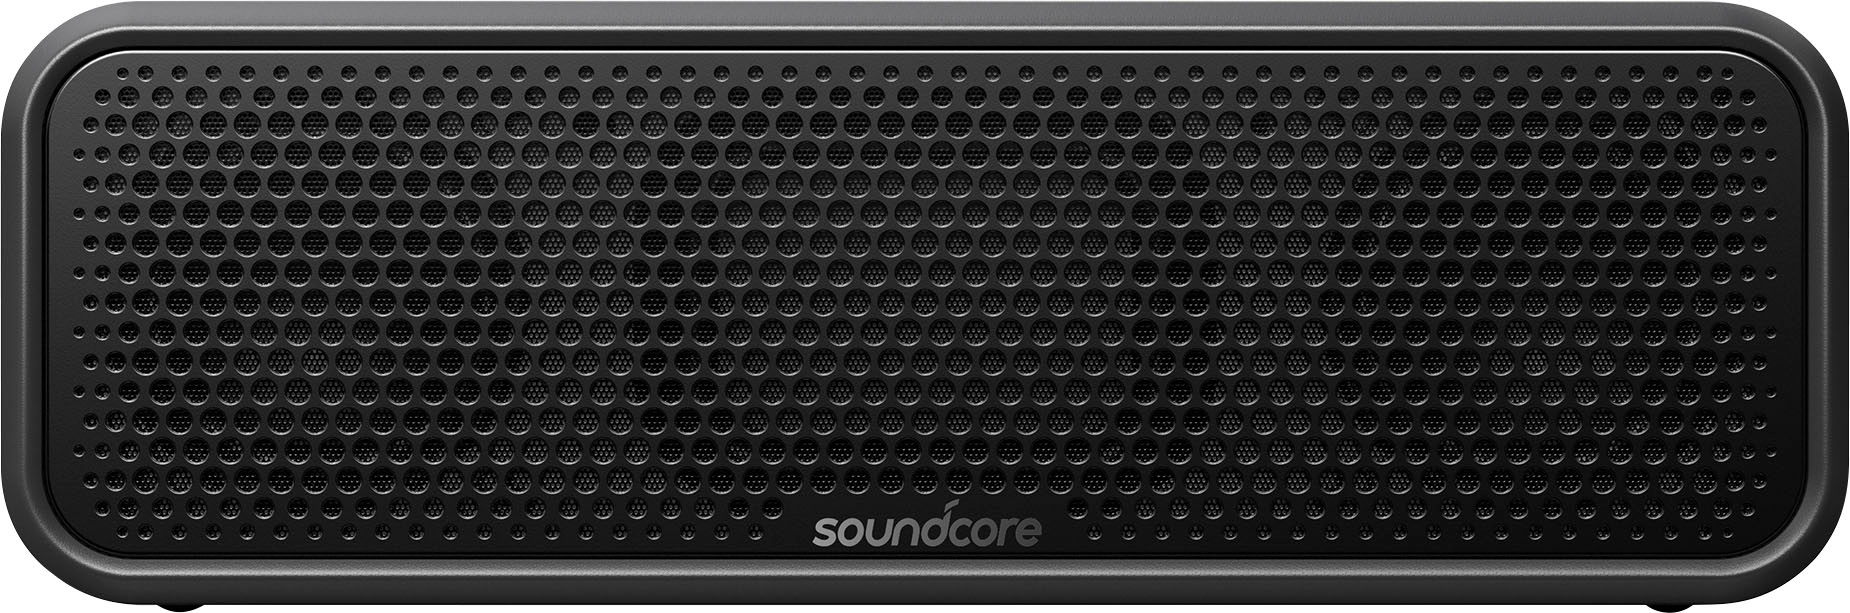 Anker - Soundcore Select 2 Portable Bluetooth Speaker - Black